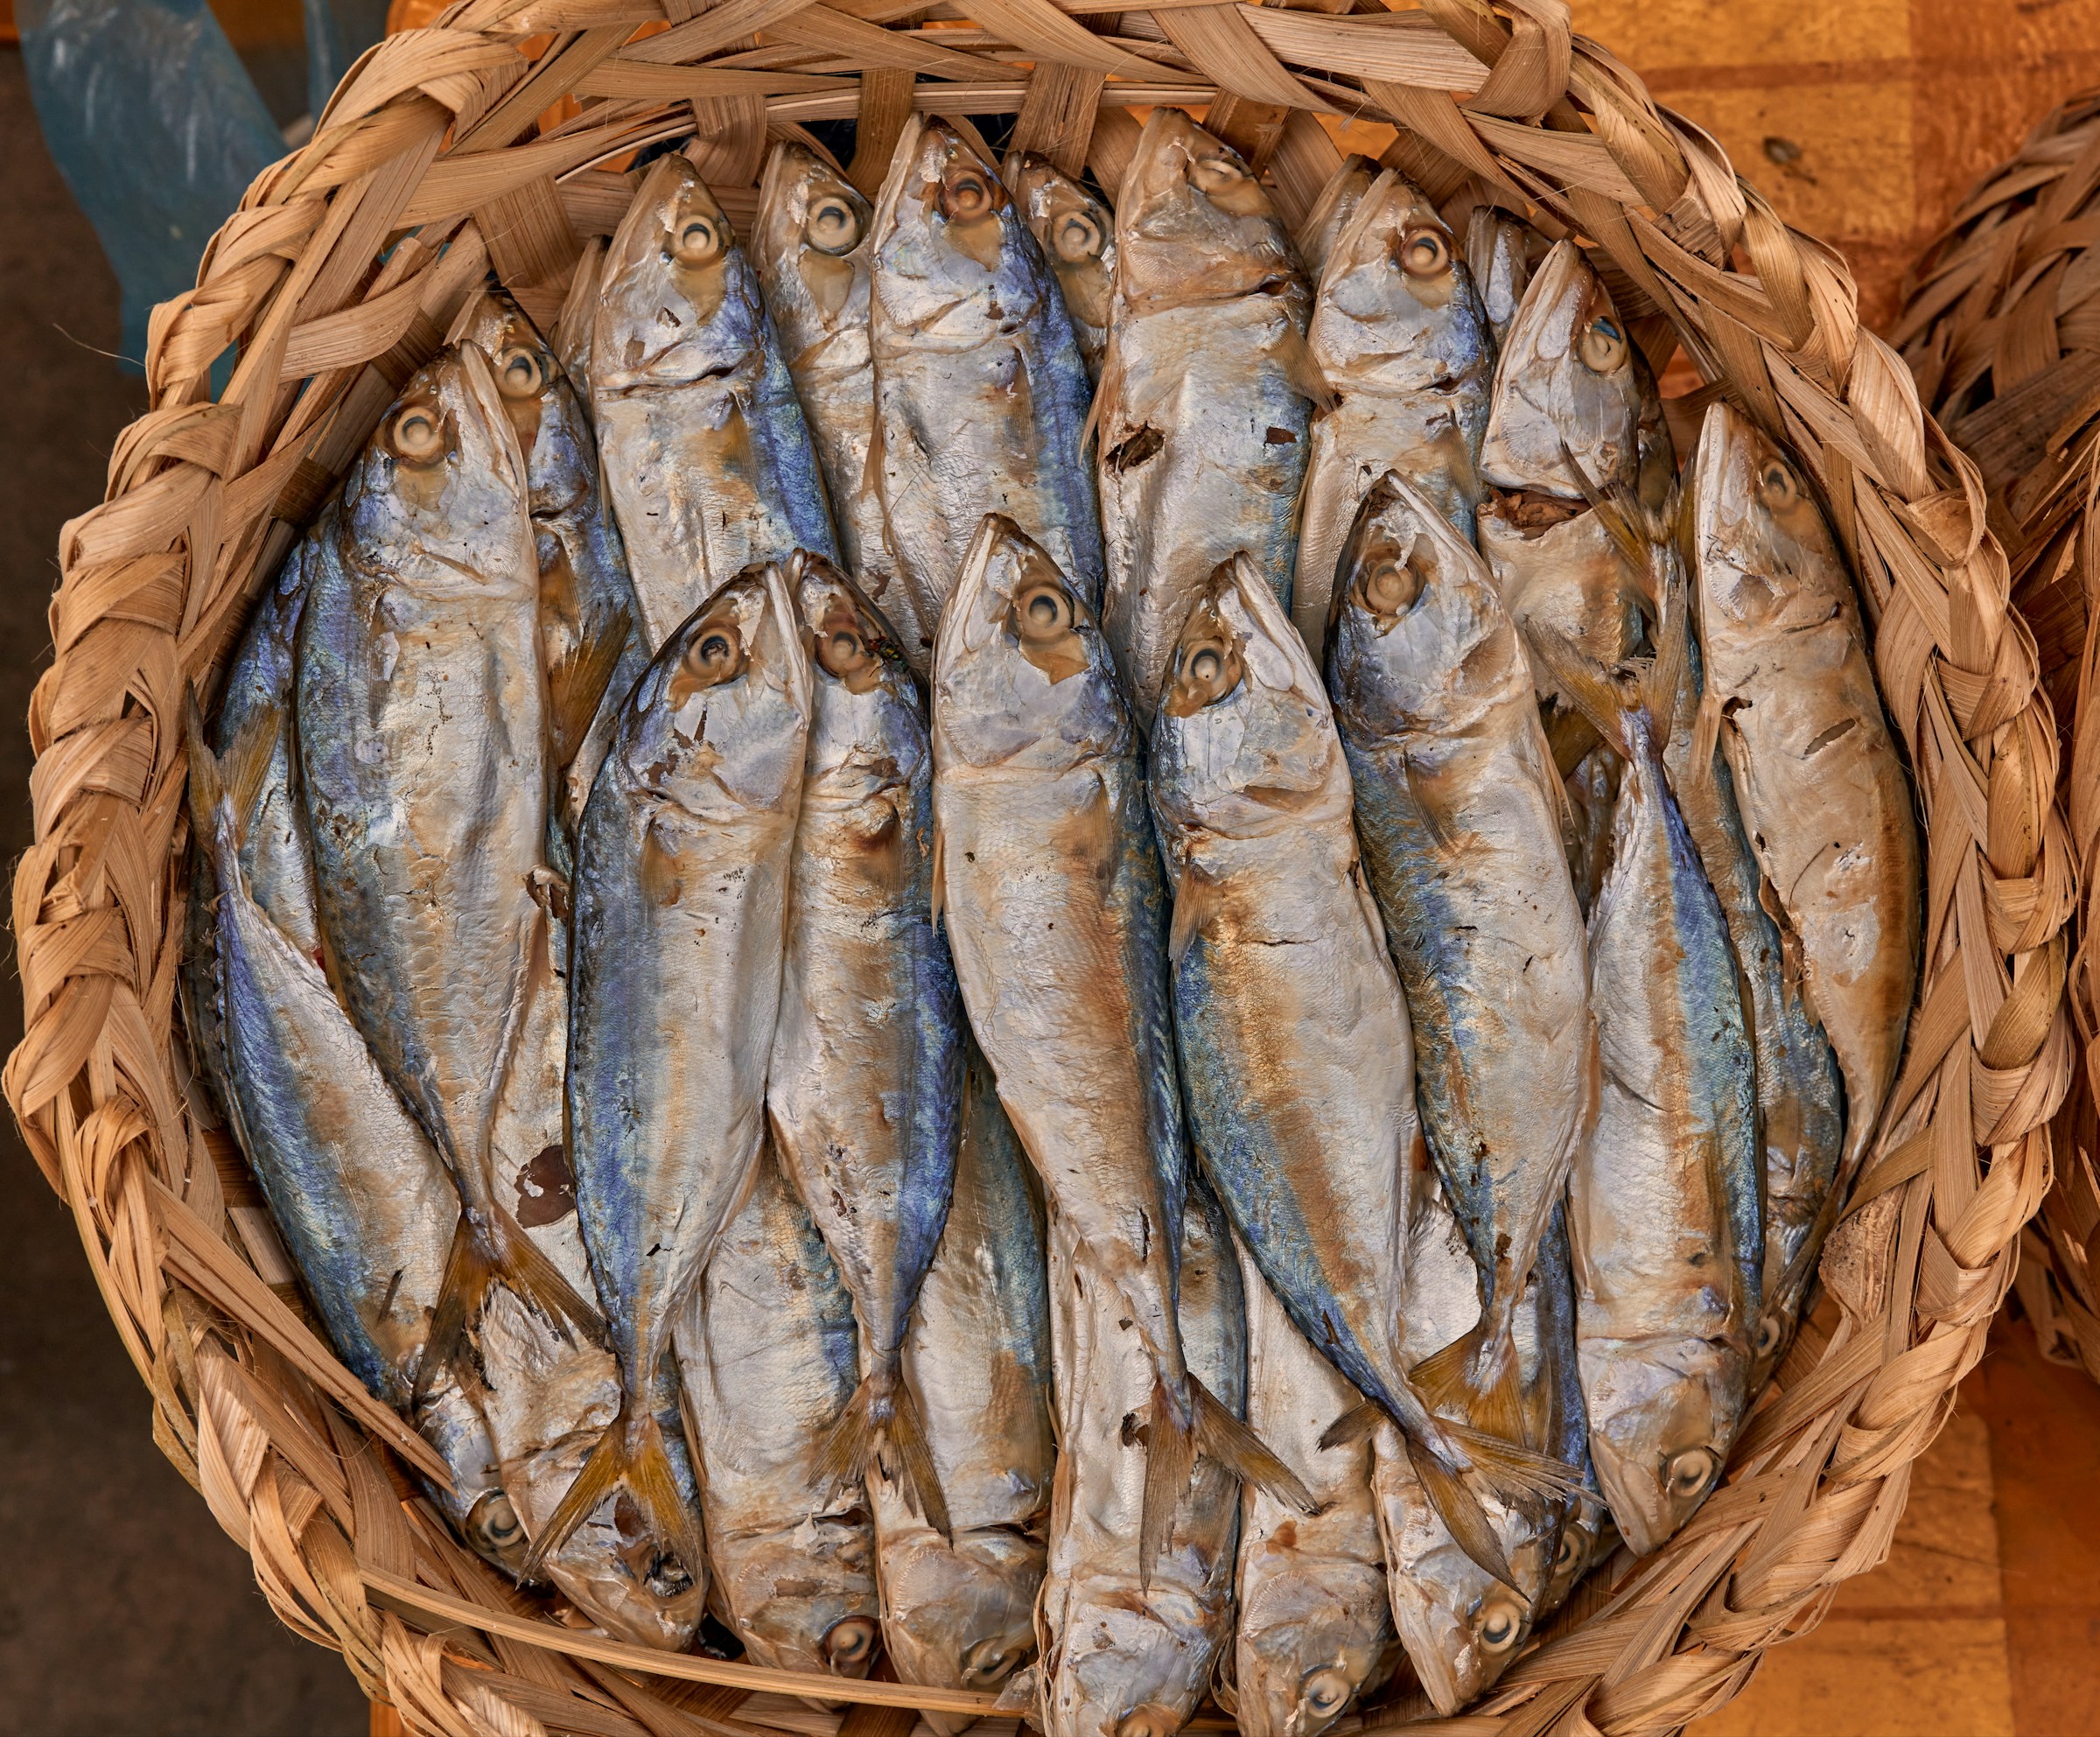 A basket of fish | Source: Unsplash